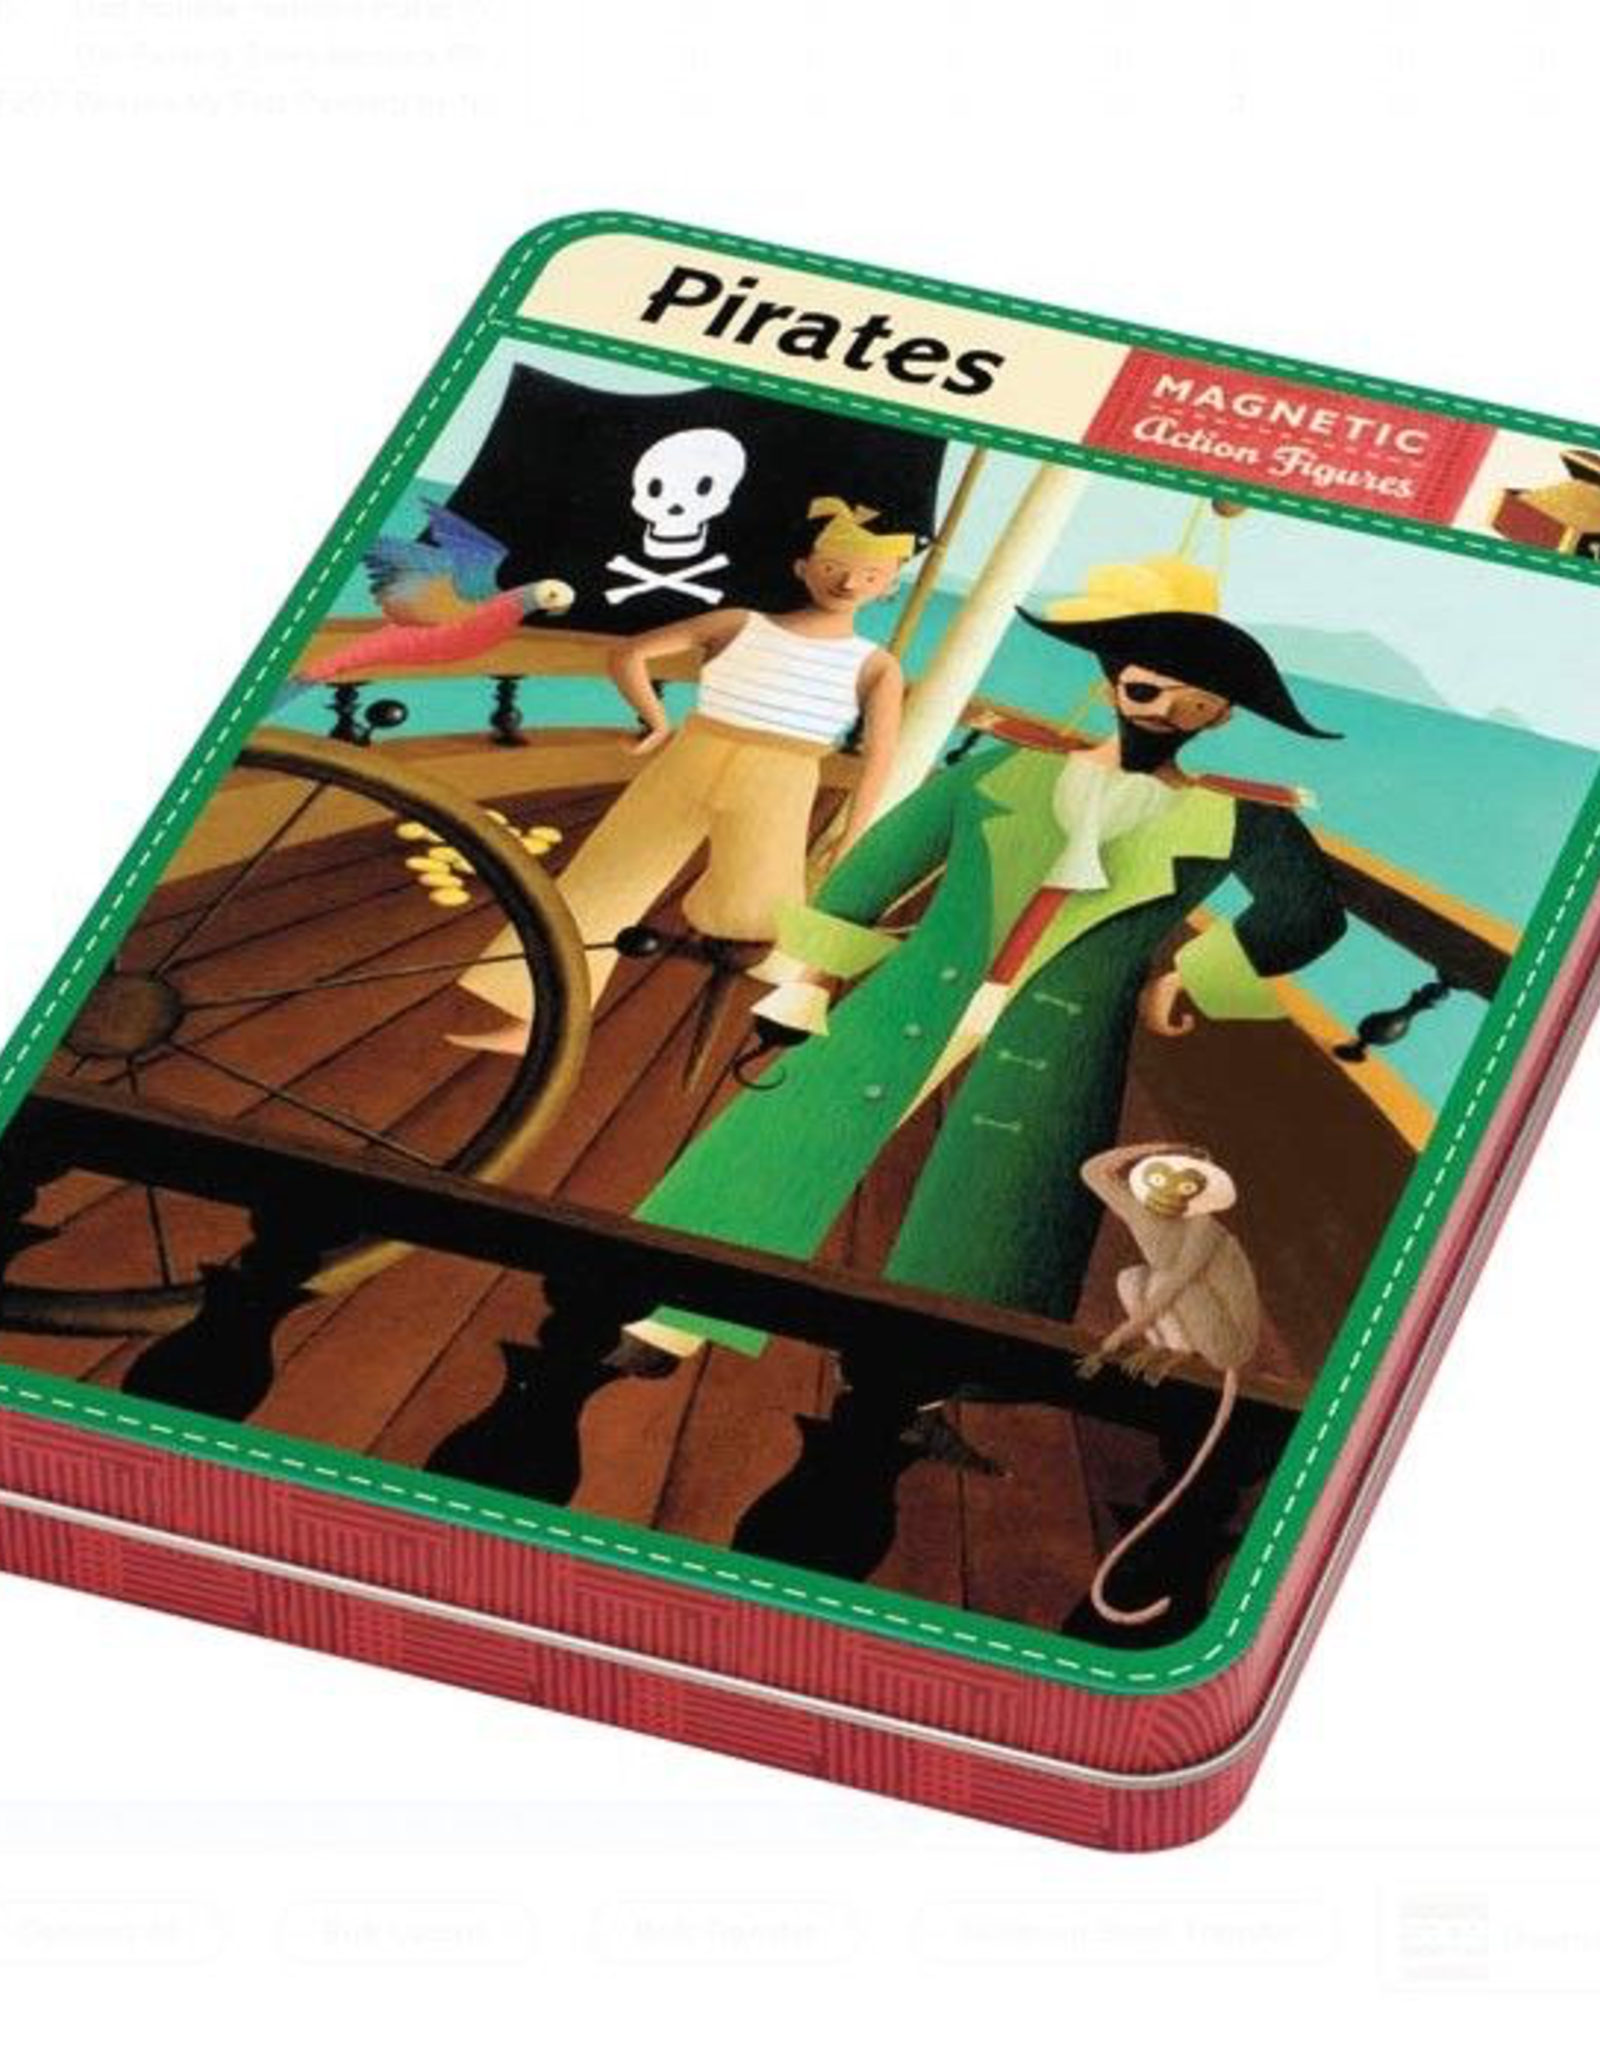 Pirates Magnetic Figures